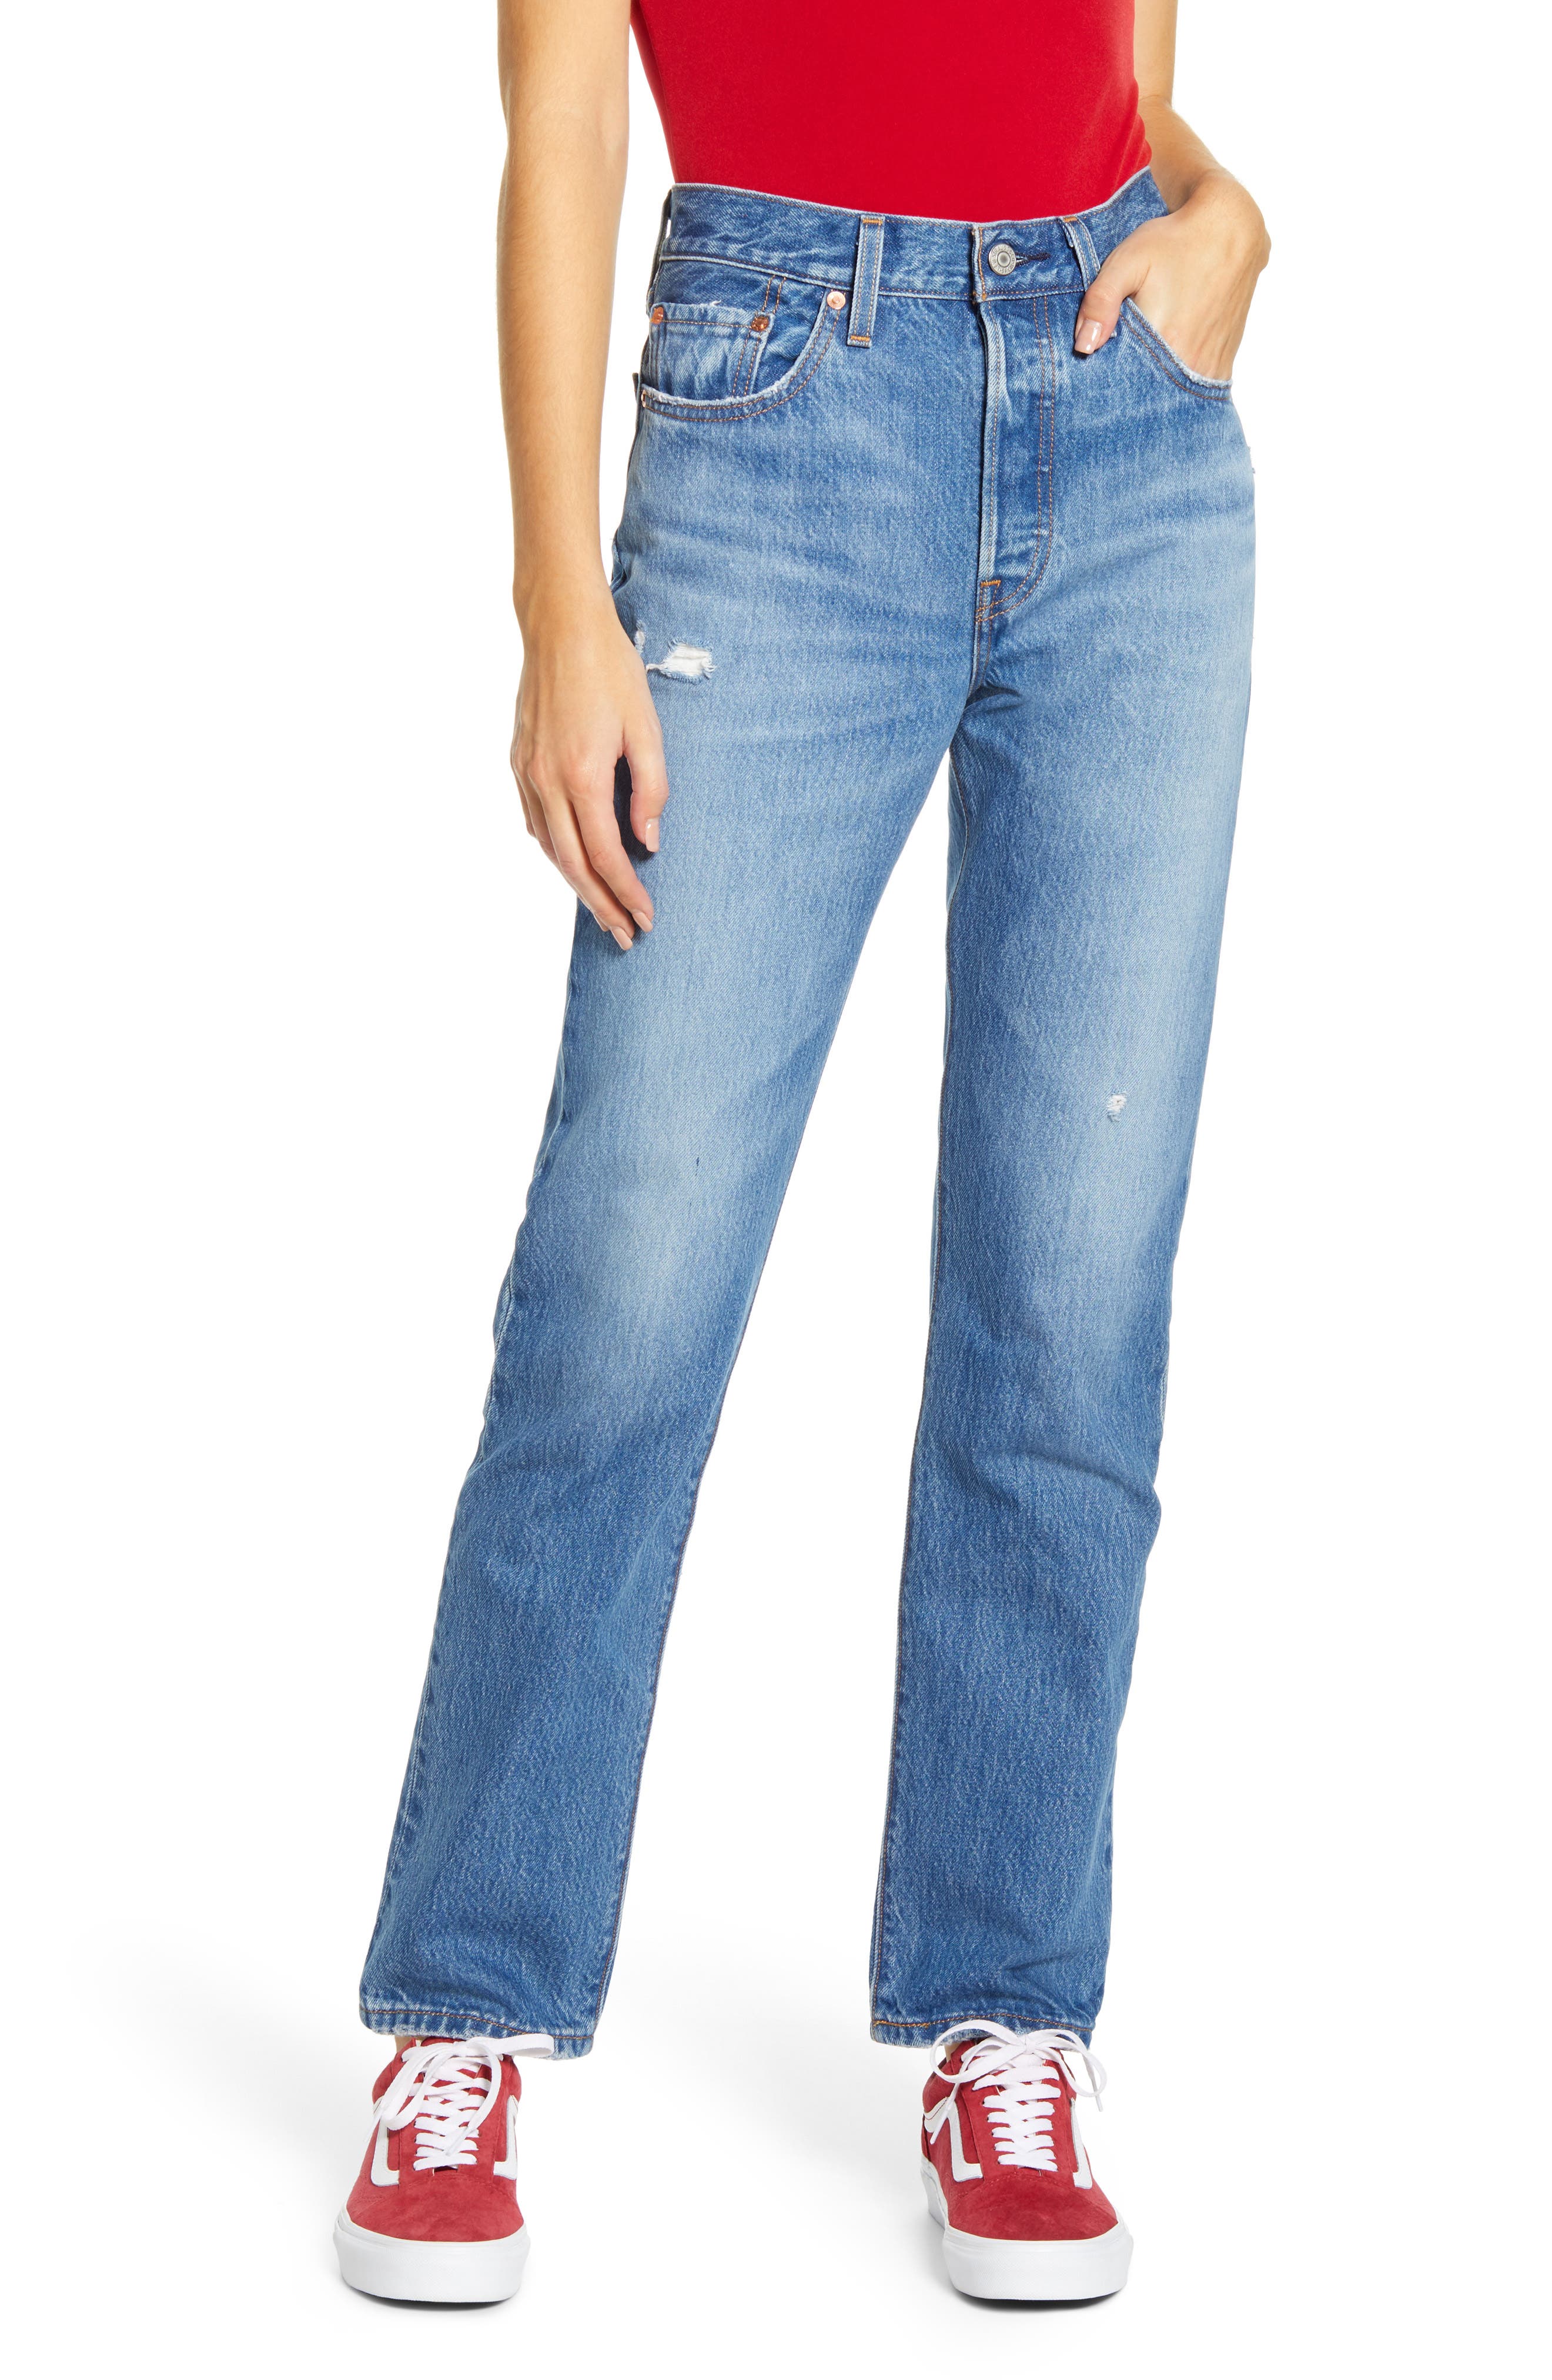 levis jeans nordstrom